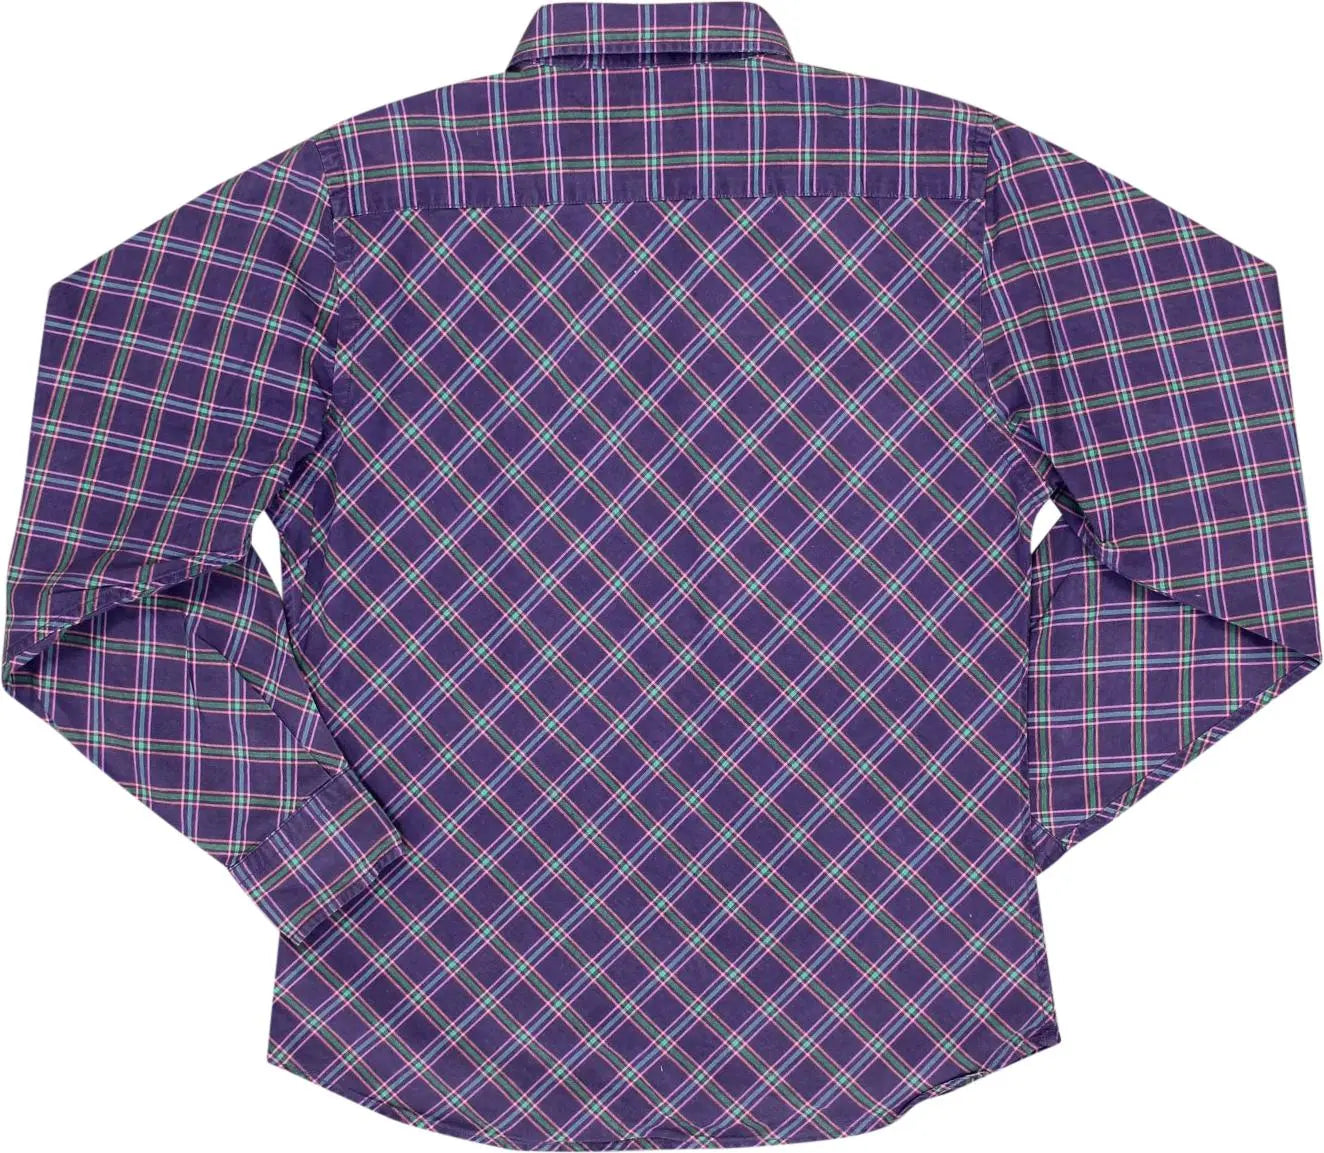 Ralph Lauren - Purple Blouse by Ralph Lauren- ThriftTale.com - Vintage and second handclothing